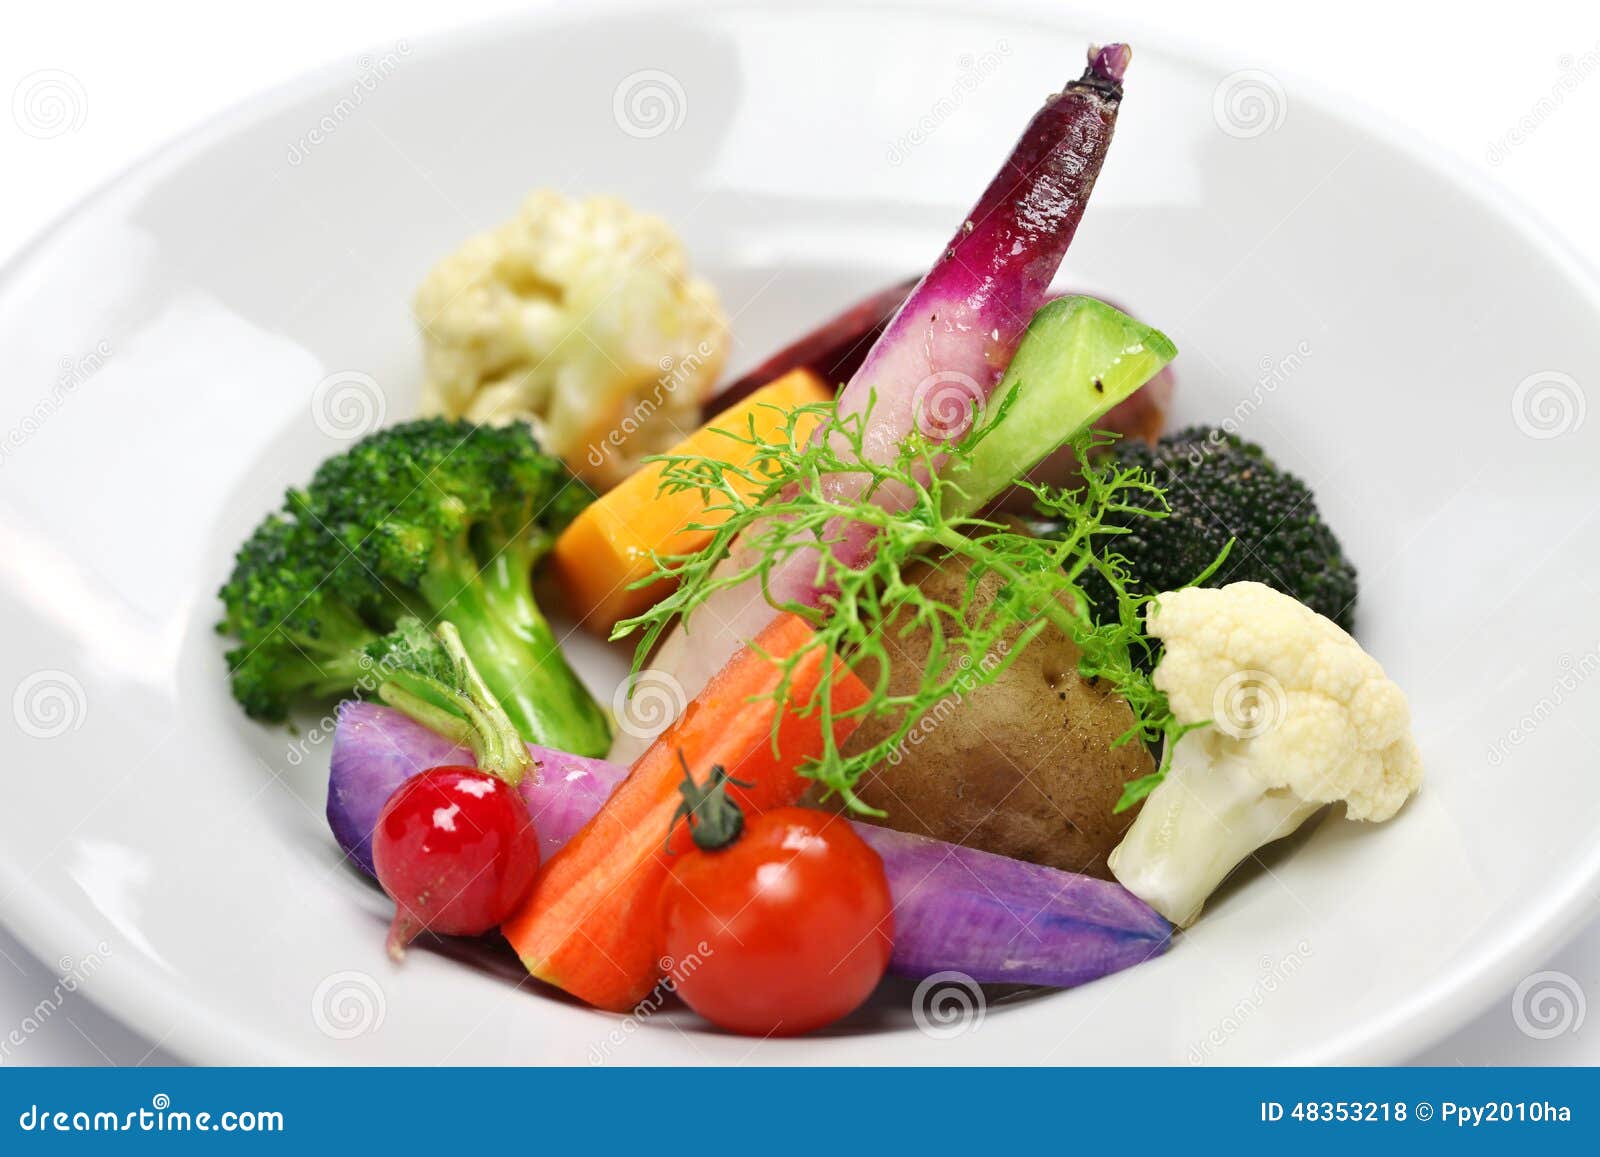 vegetarian salad, healthy lifestyle 